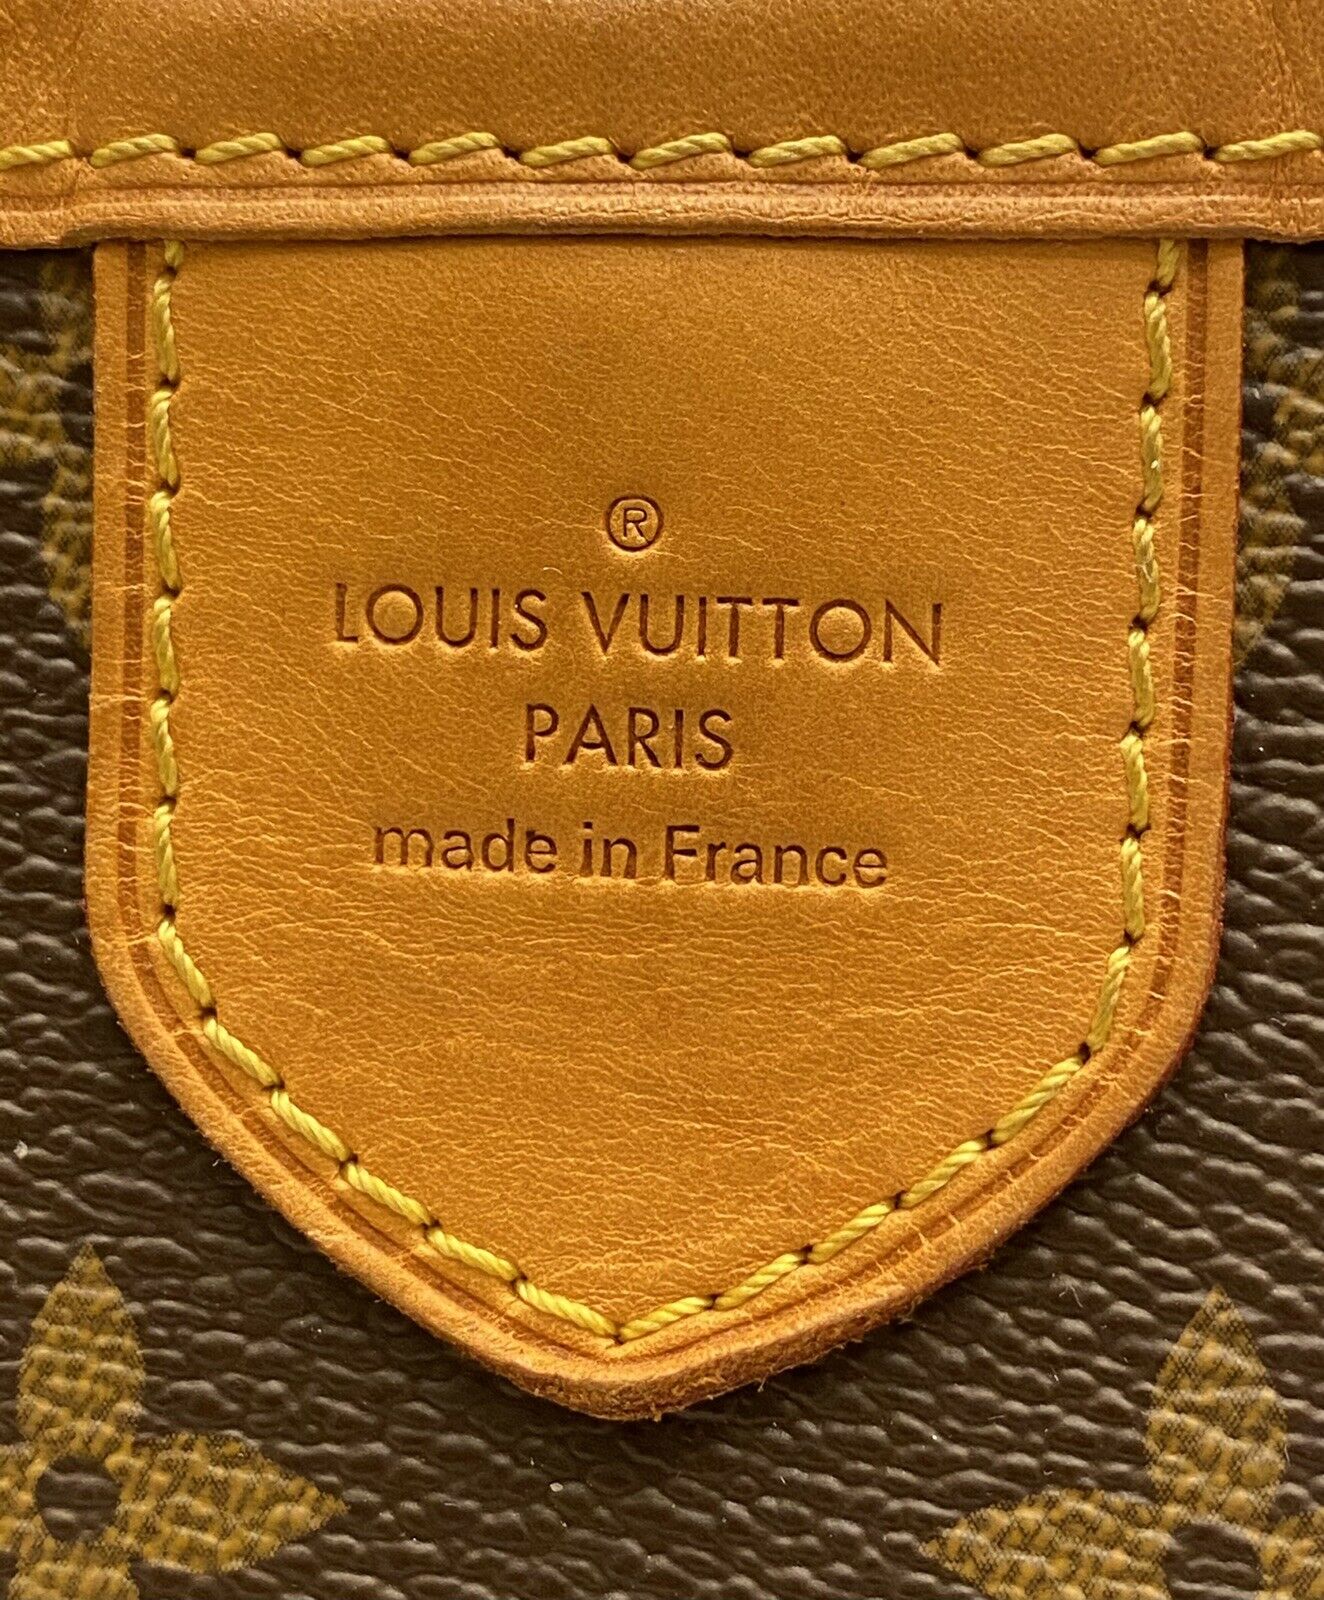 Louis Vuitton Delightful MM Monogram Shoulder (MI1180) – AE Deluxe